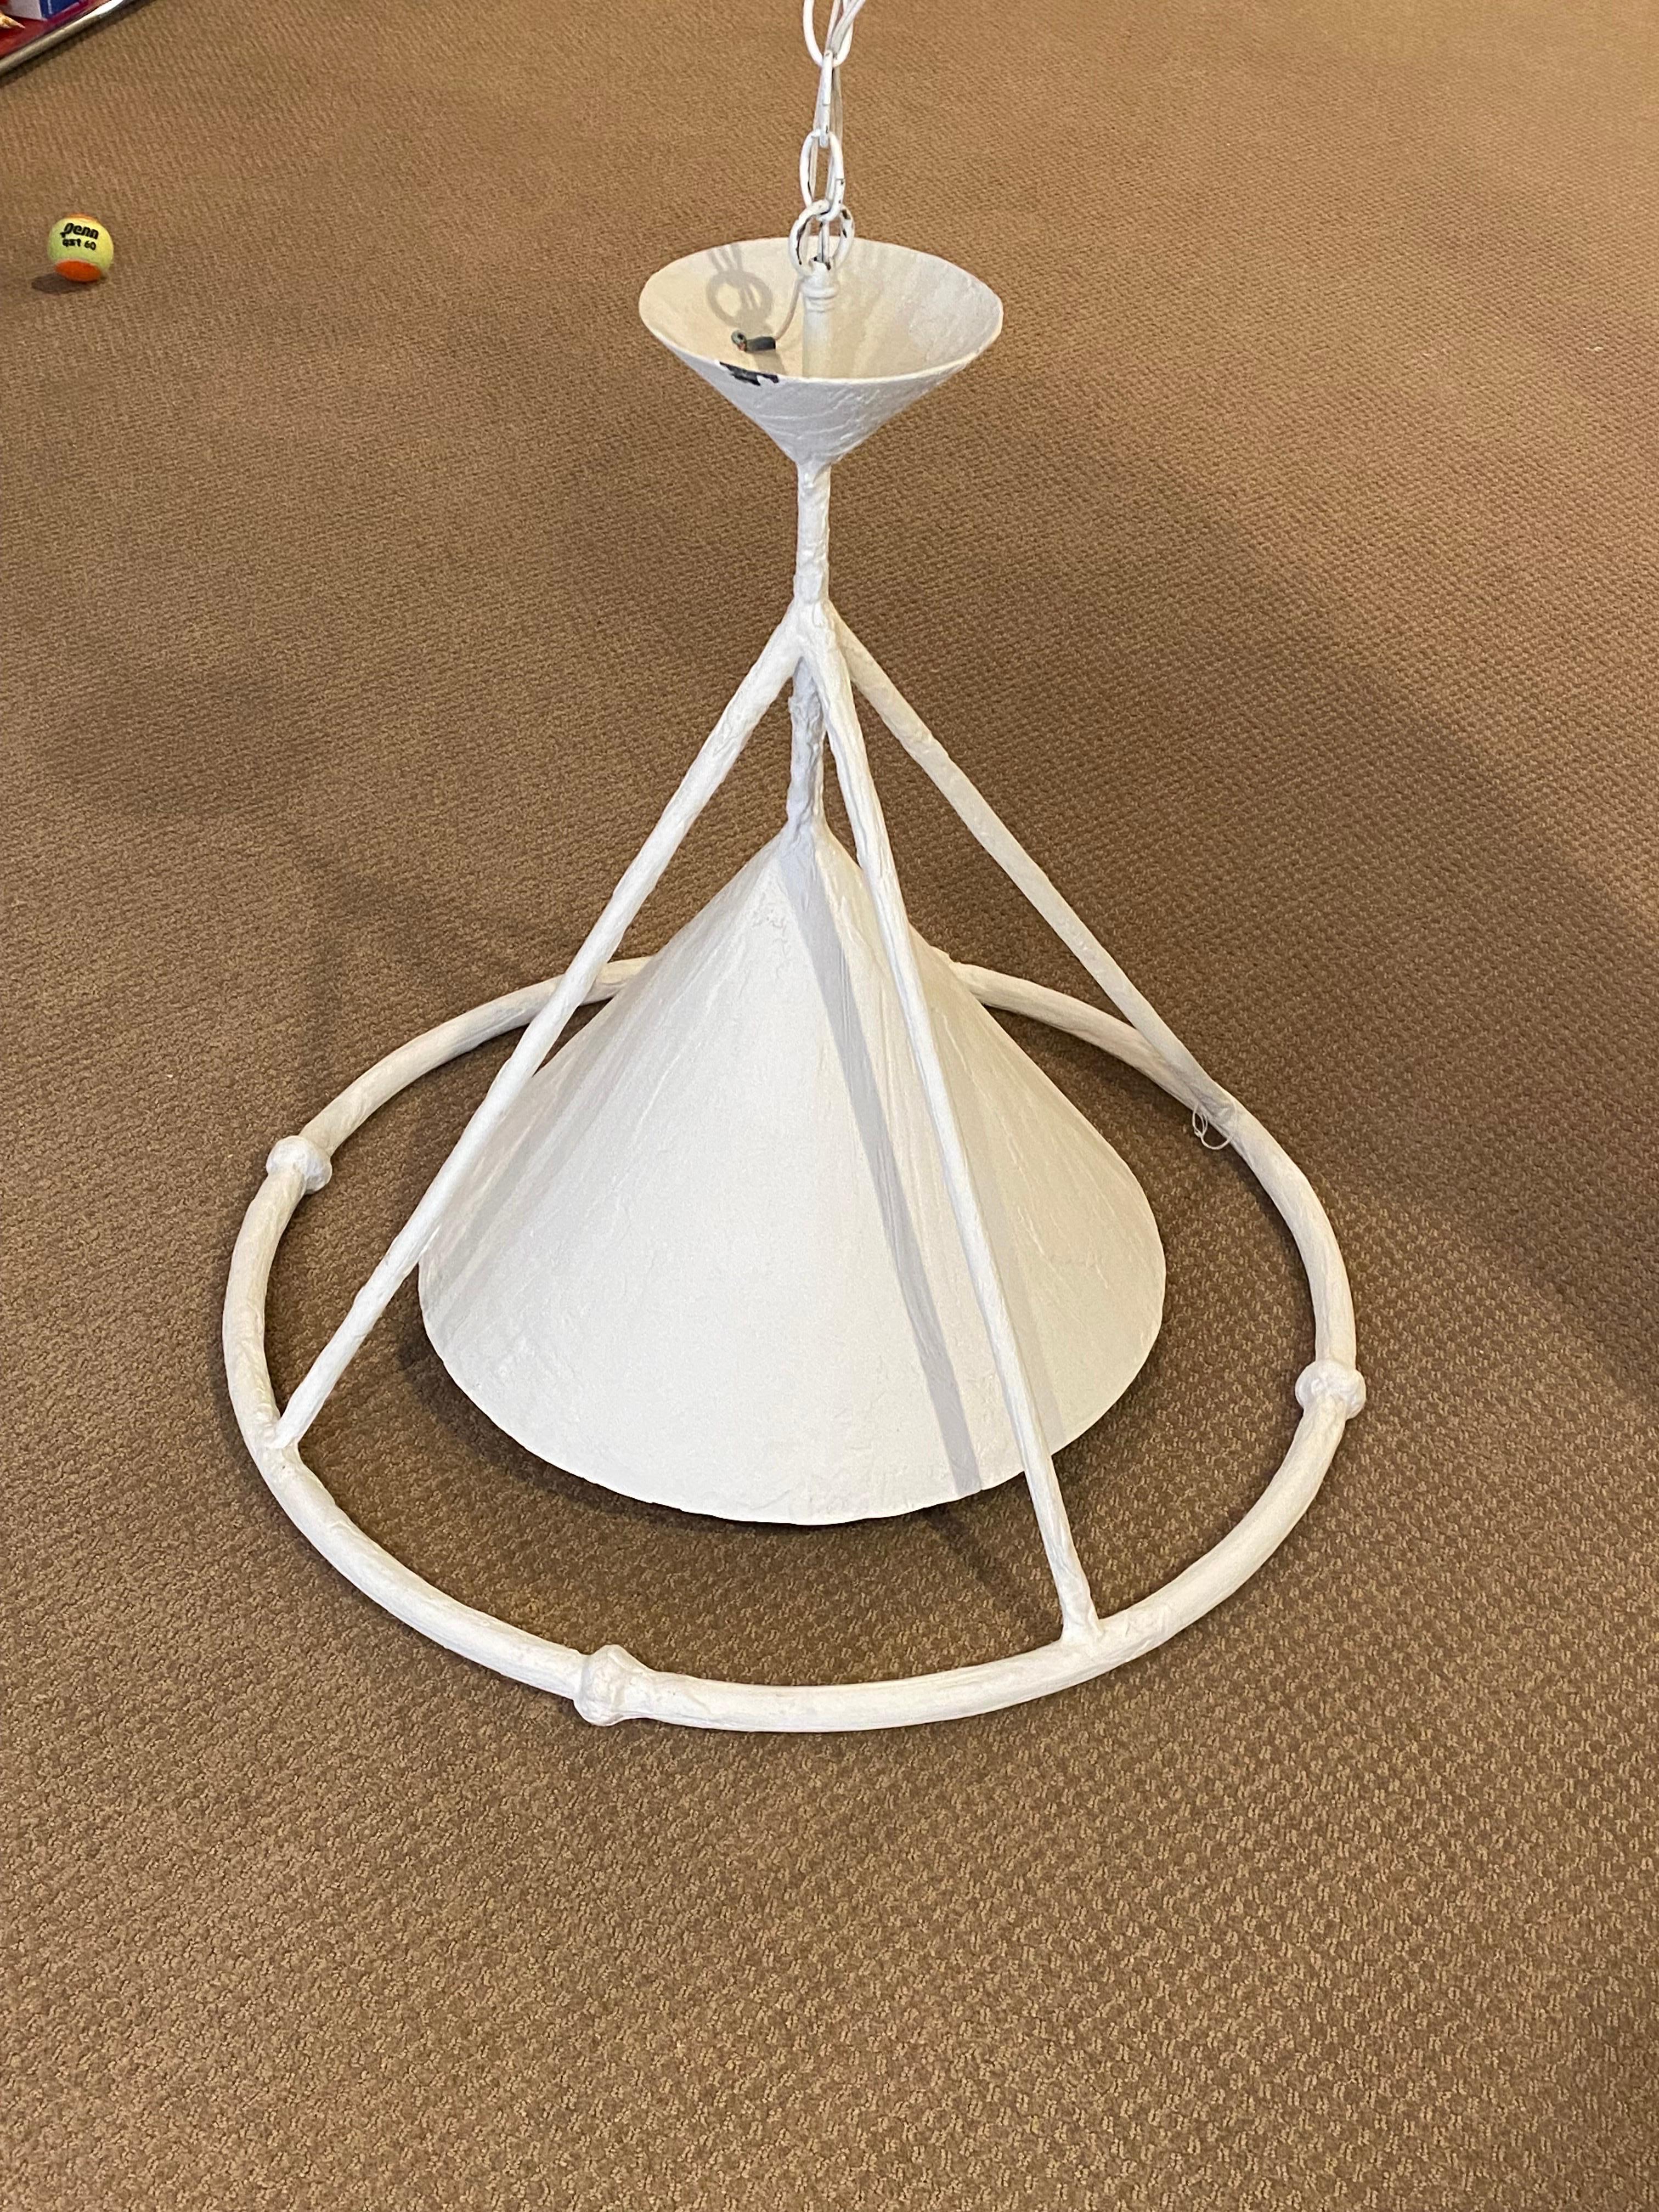 American White Plaster Custom Hanging Lighting Fixture by Paul Ferrante 